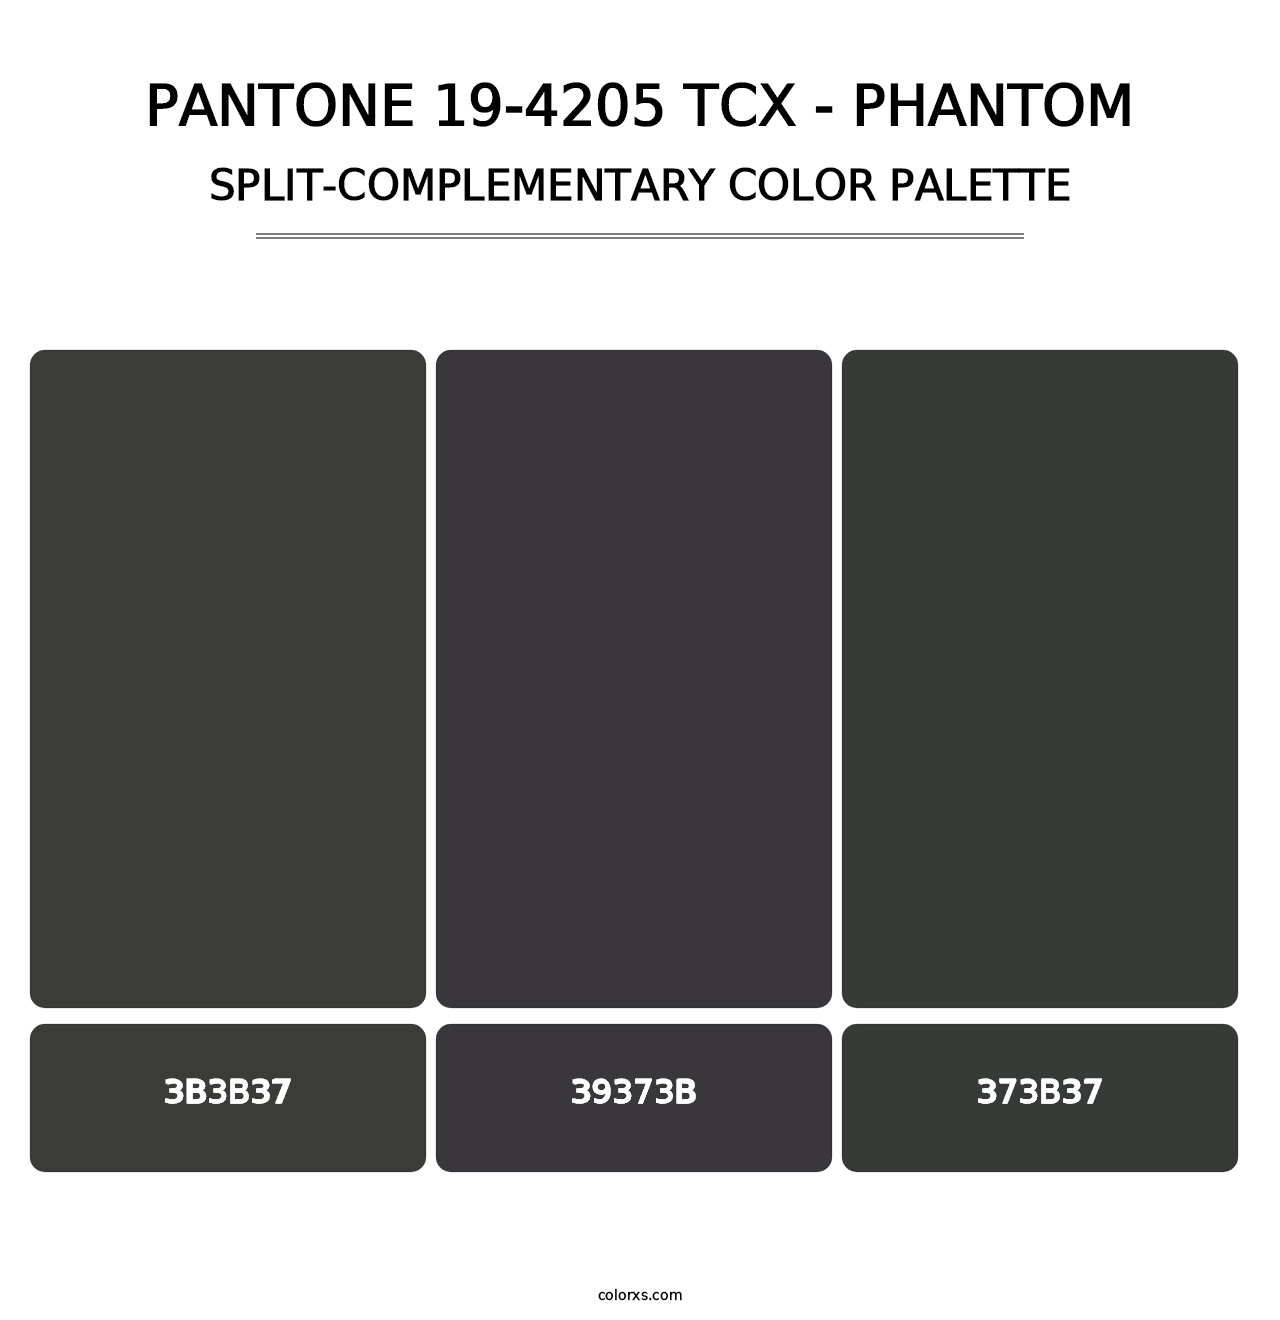 PANTONE 19-4205 TCX - Phantom - Split-Complementary Color Palette